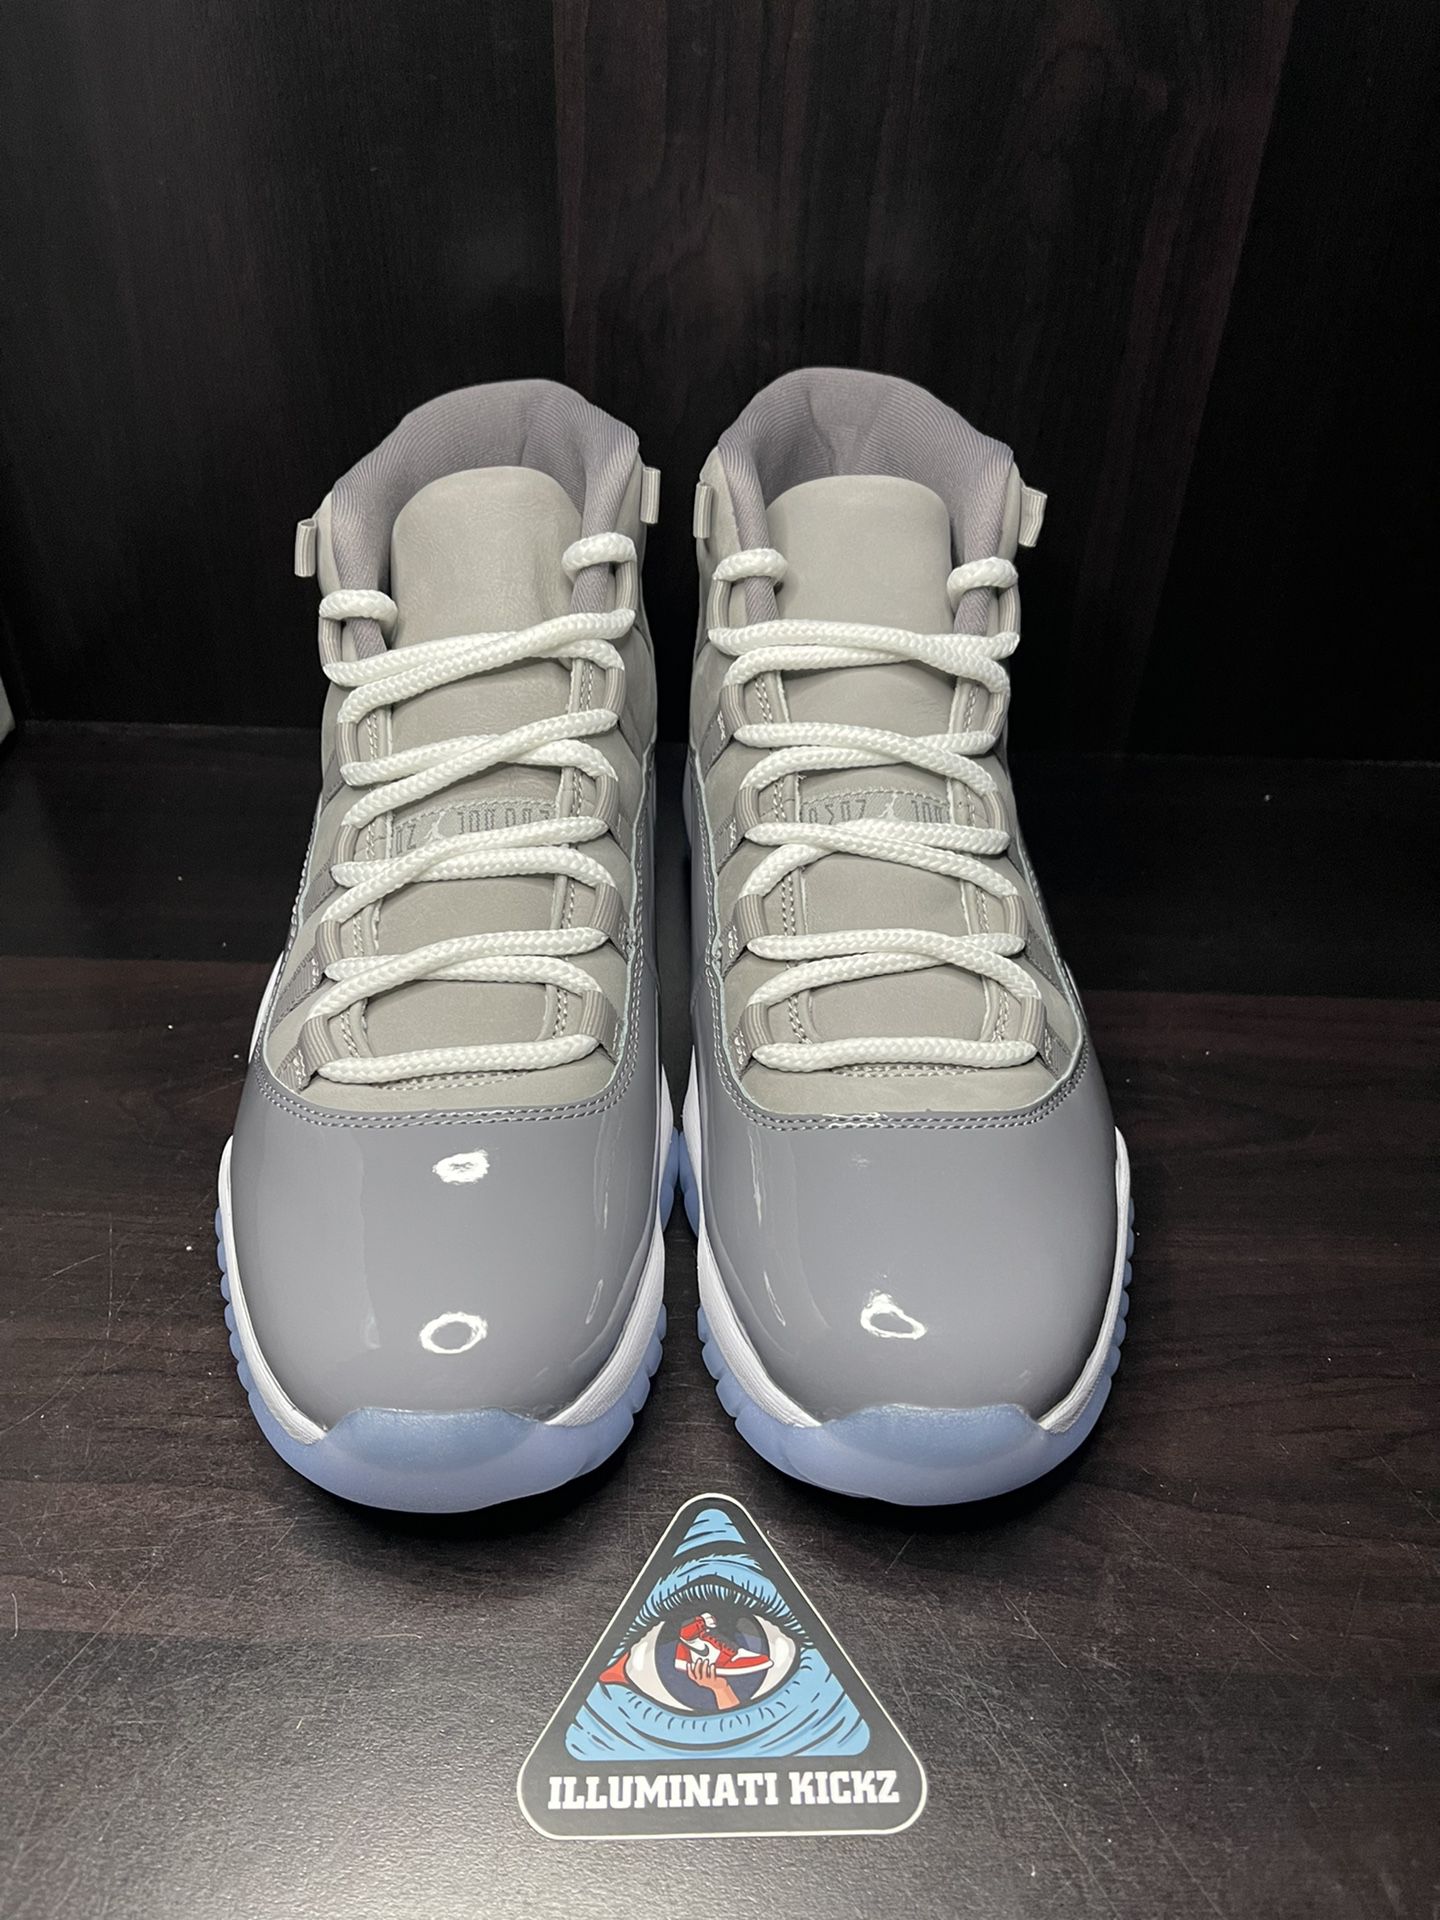 Custom Jordan 11 Cool Grey(2010) for Sale in San Antonio, TX - OfferUp